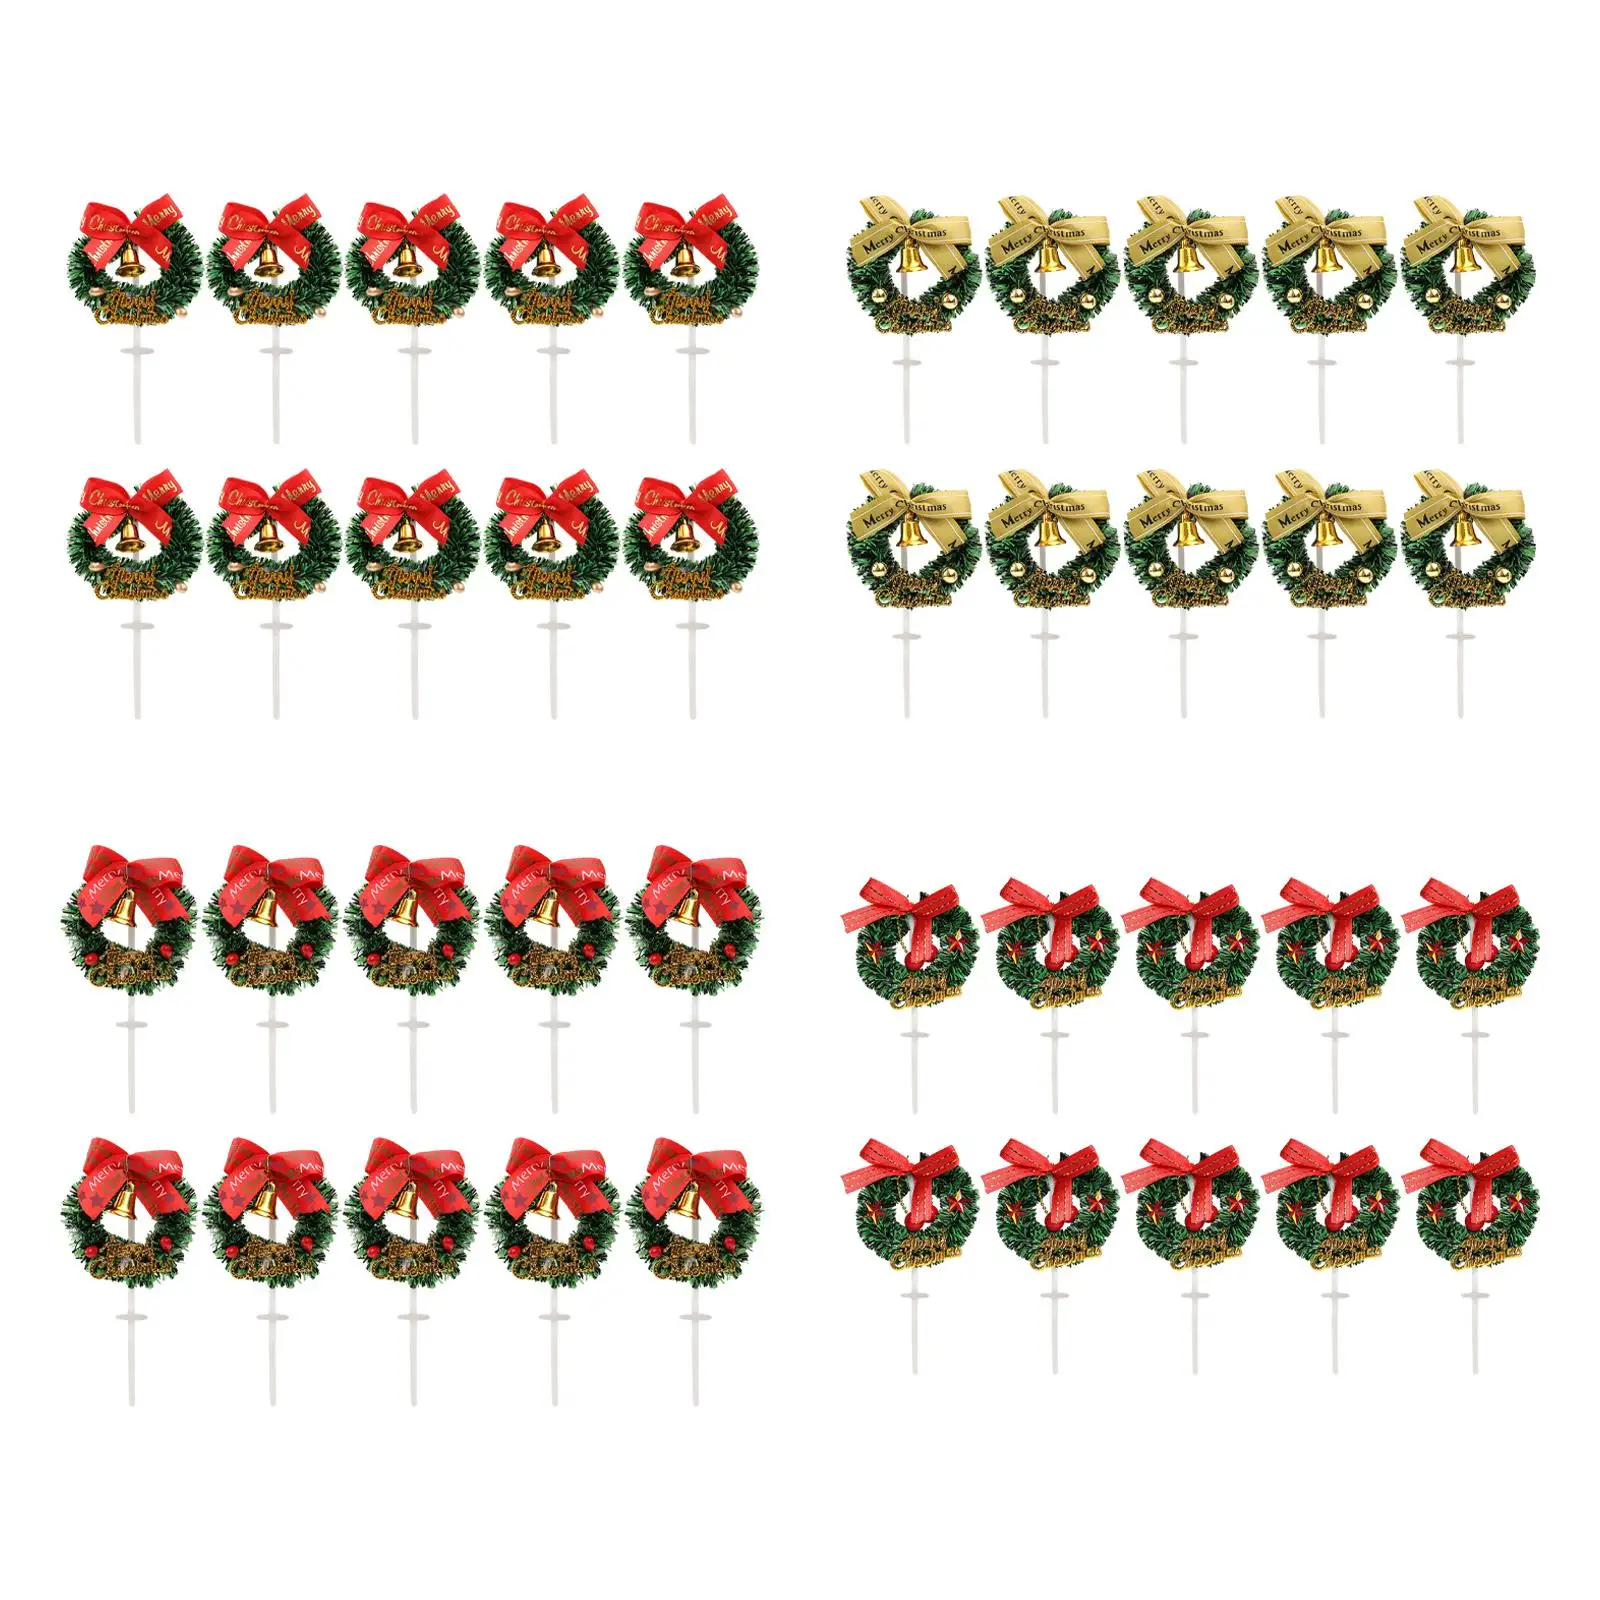 10 Pieces Mini Christmas Wreaths Home Decoration Winter Holiday Christmas Tree Decorations Cupcake Sticks Cake Decorations